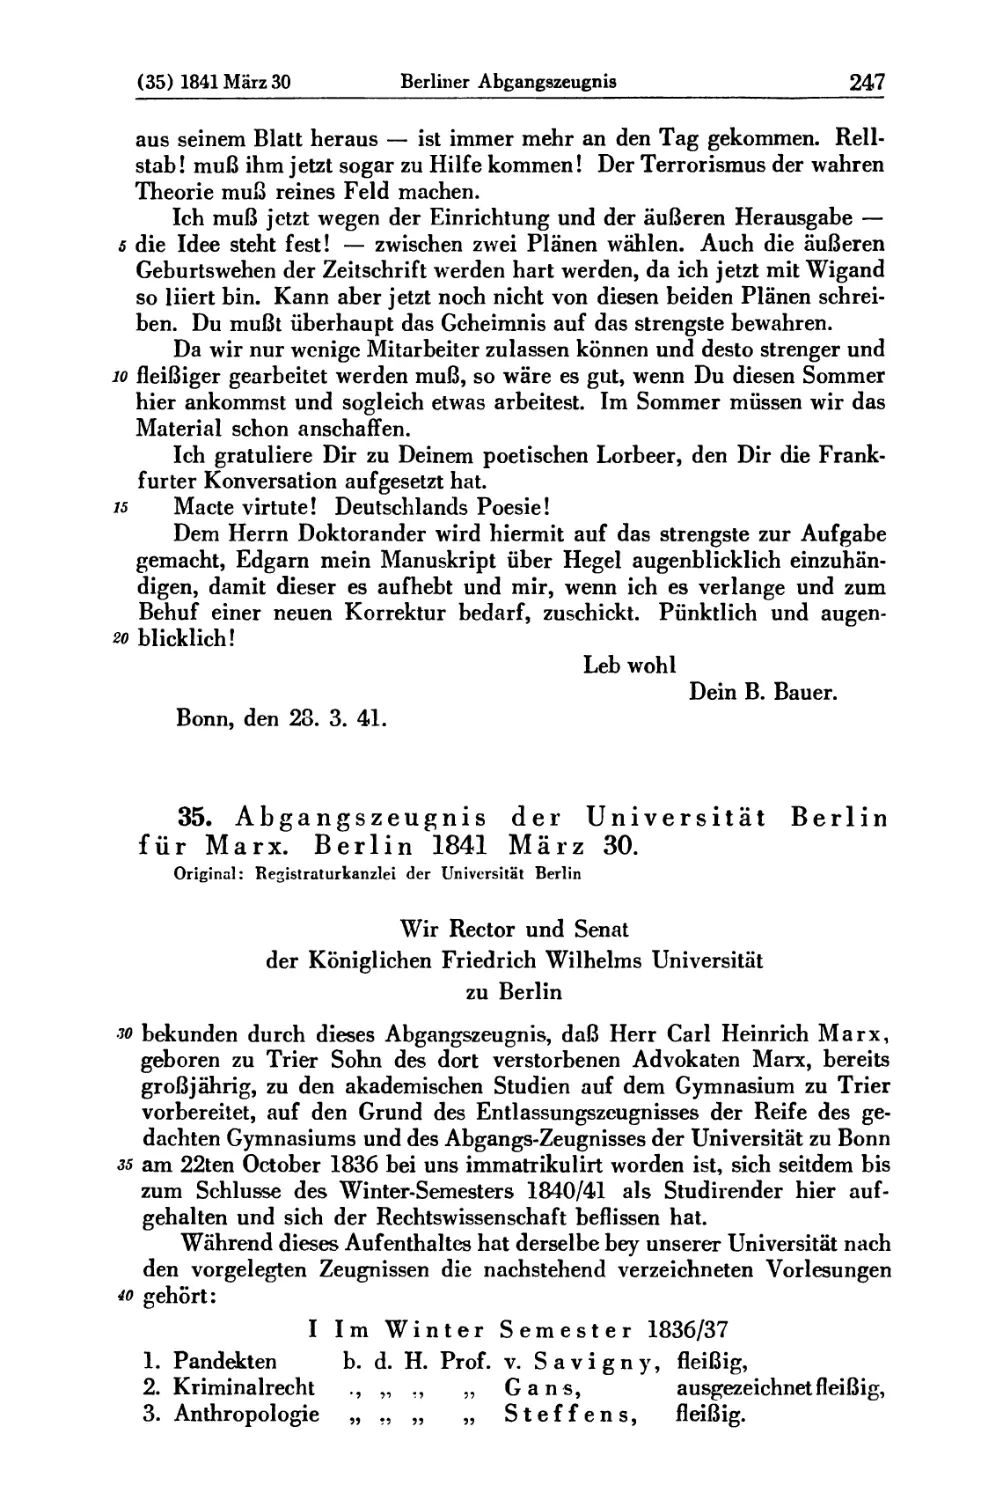 35. Abgangszeugnis der Universität Berlin für Marx. Berlin 1841 März 30